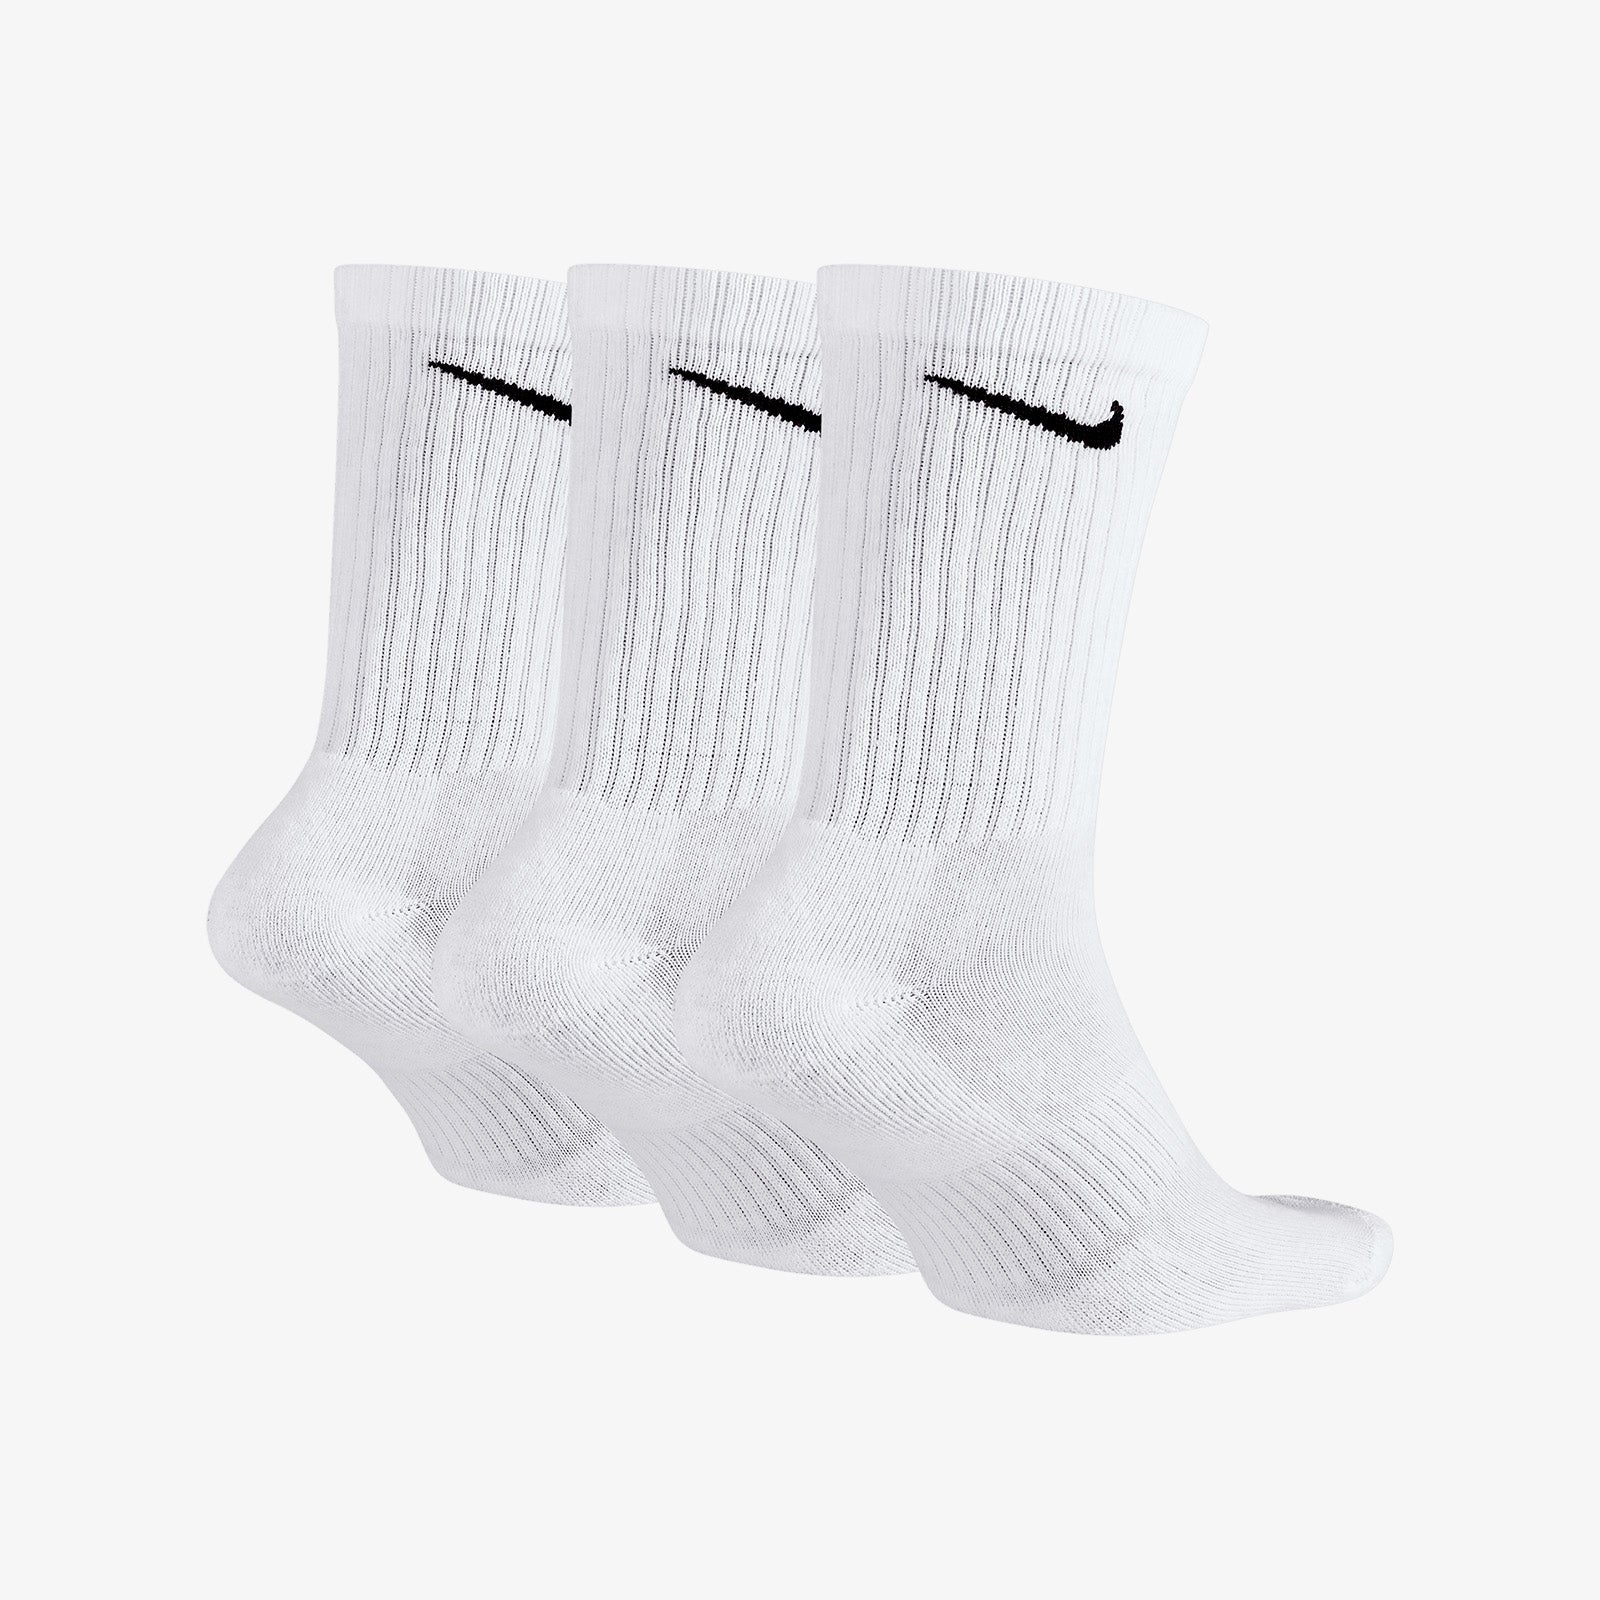 Nike Everyday Cushion Crew Socks Pairs) - White Throwback